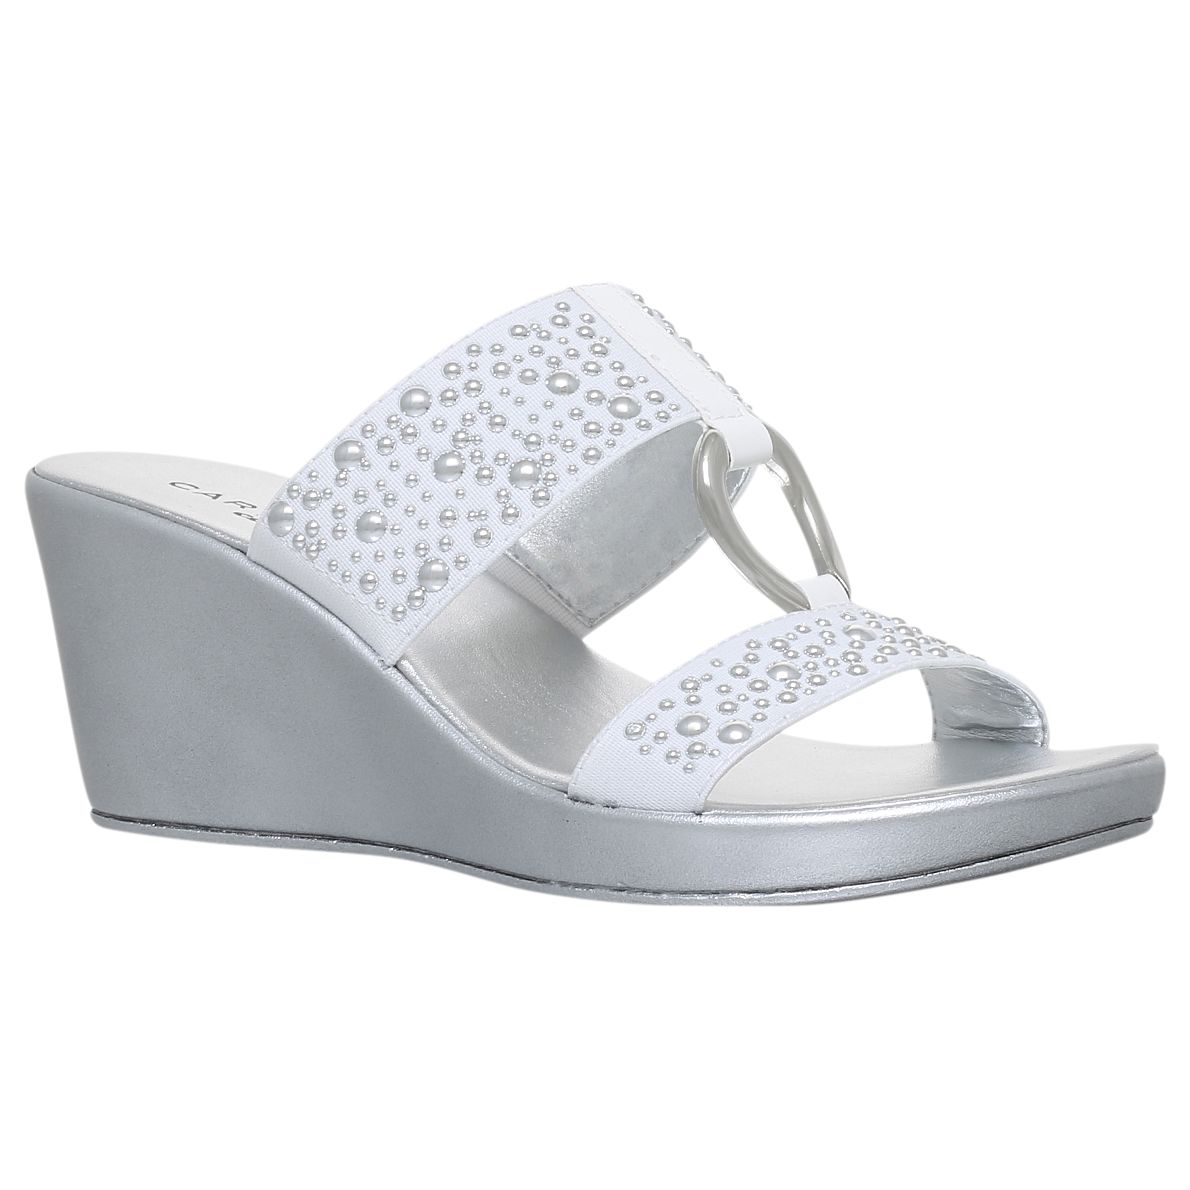 Carvela Comfort Salt Wedge Heel Sandals, White